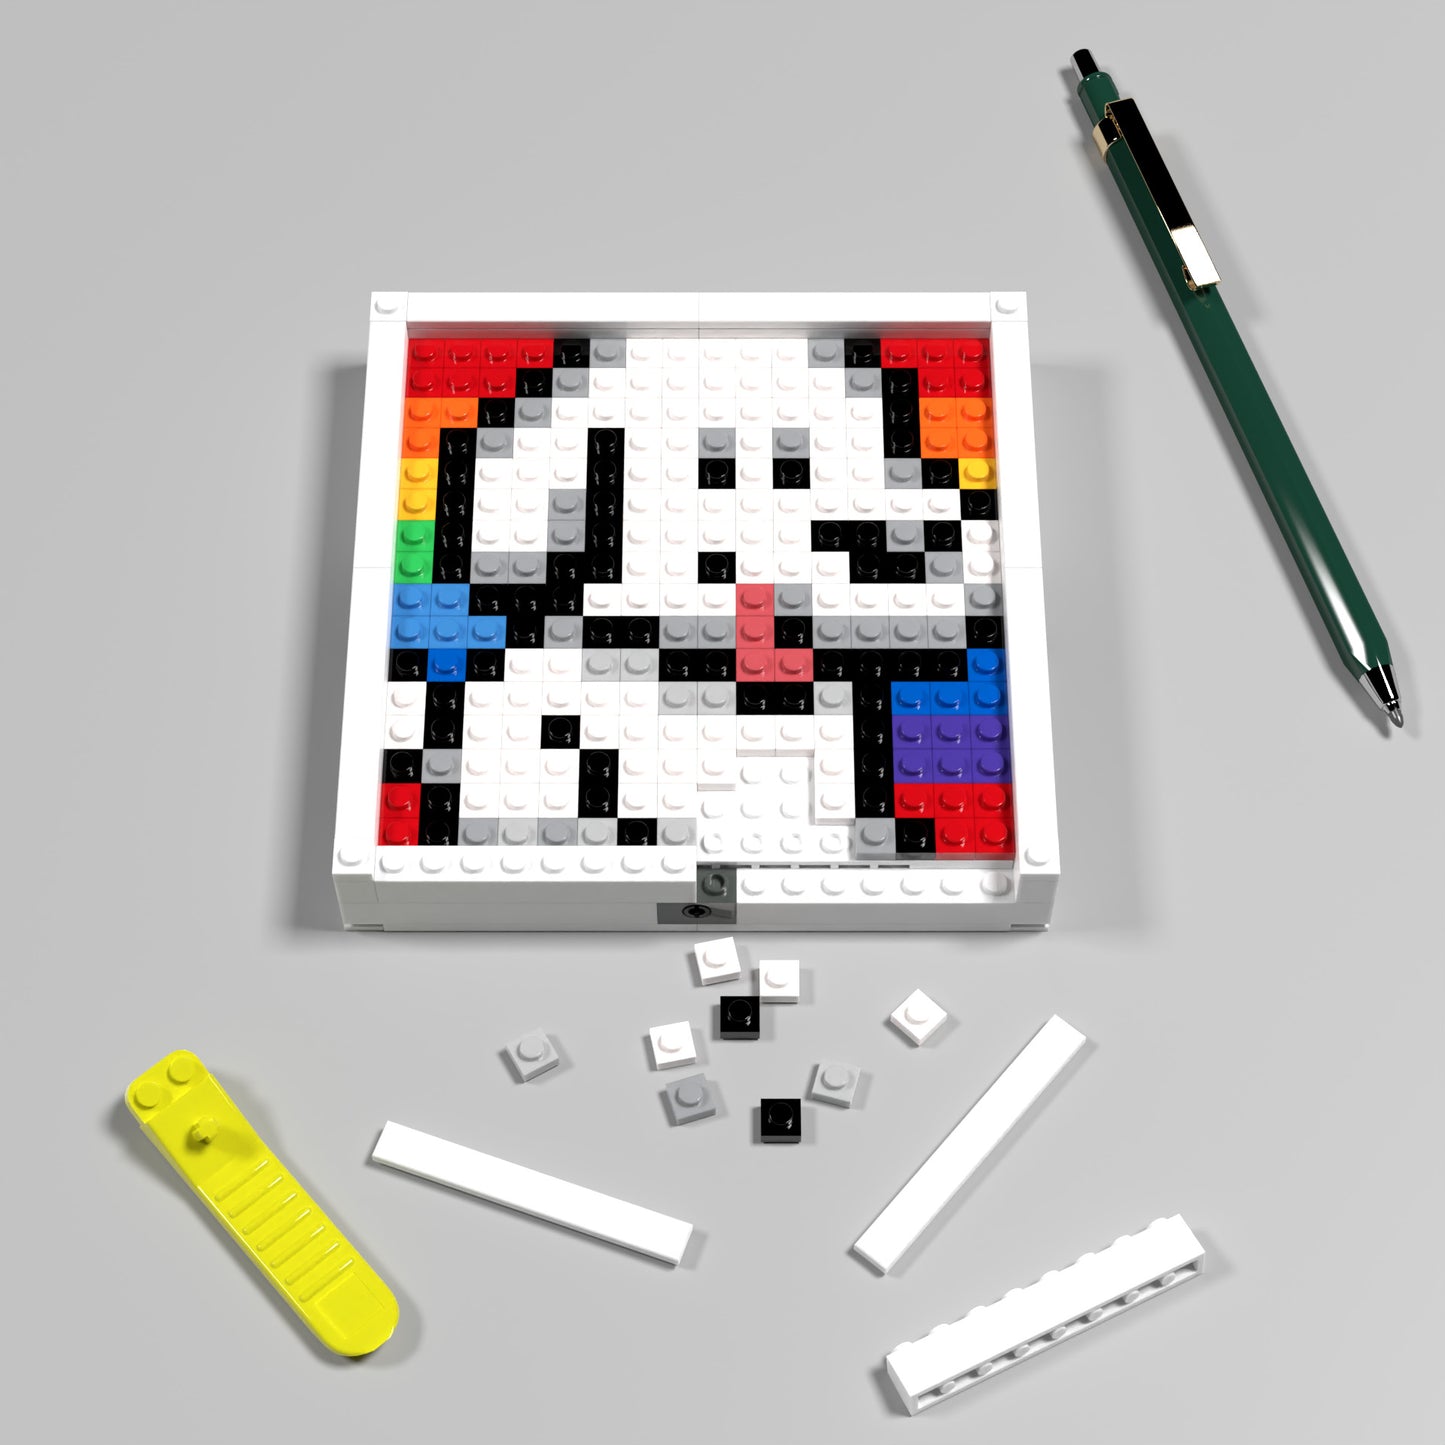 Pixel Art of Dogs Compatible Lego Set - A Minimalist Pet-themed Decoration